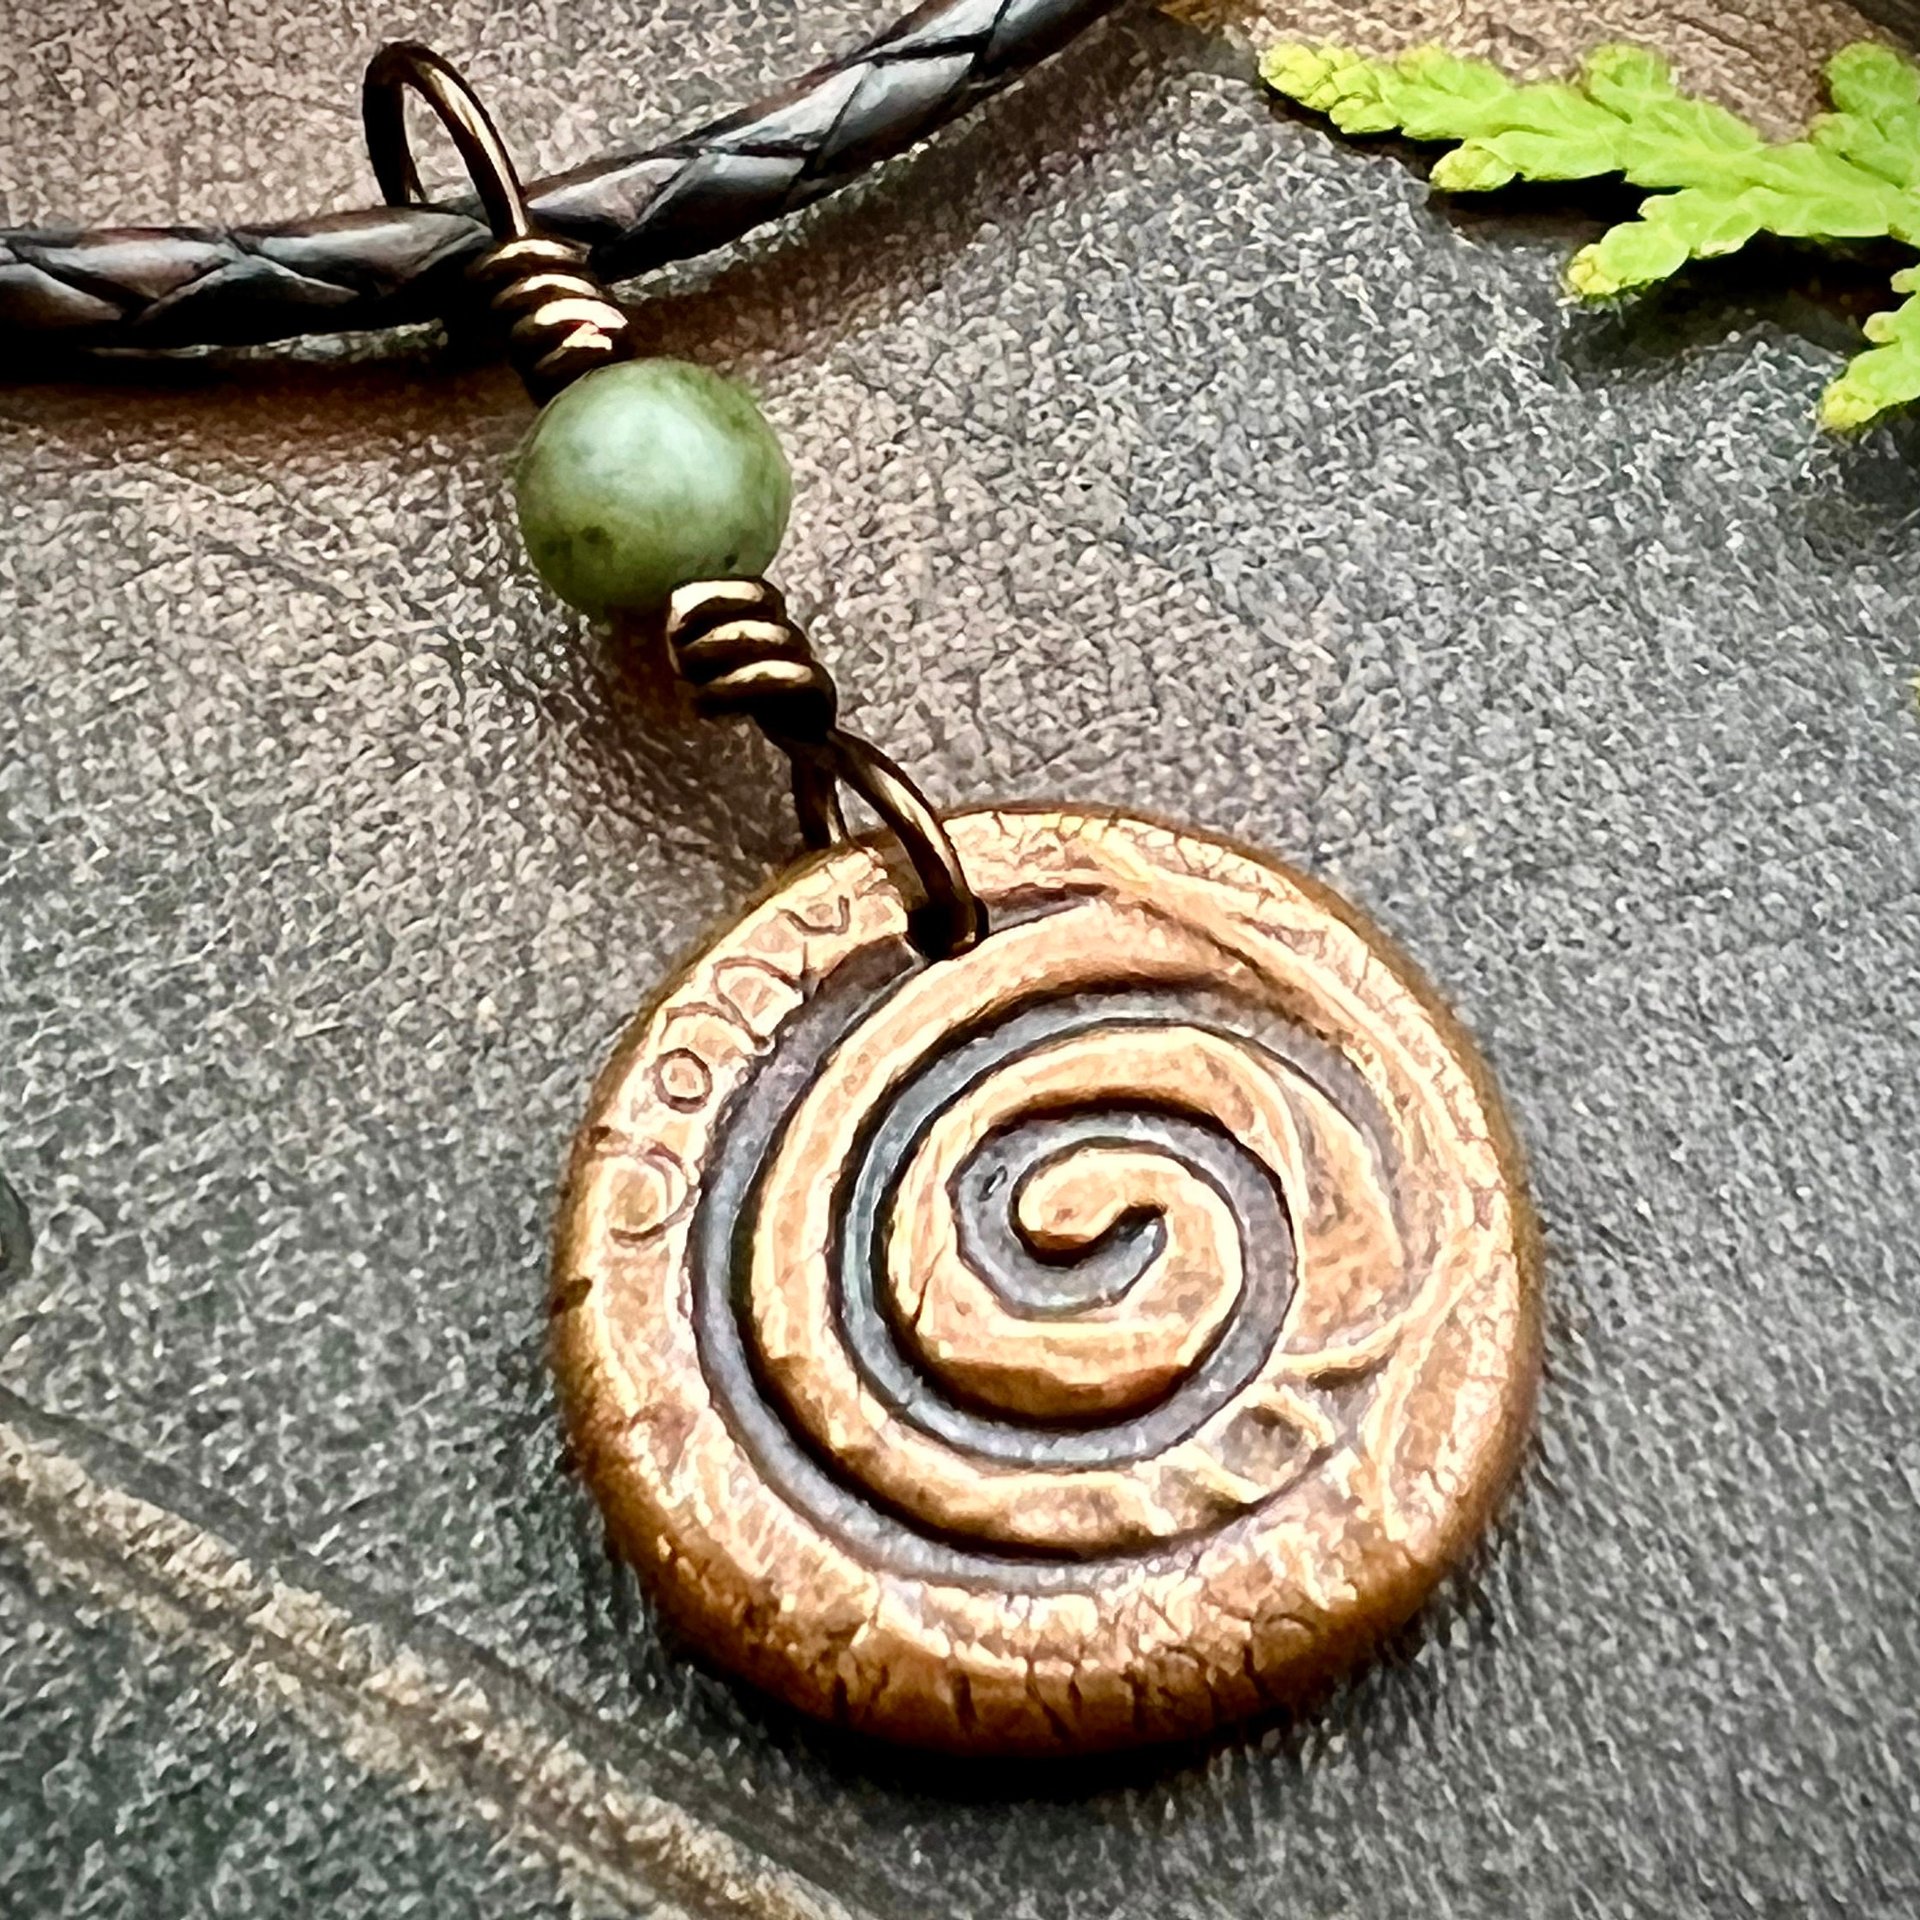 Raven Copper Wax Seal Charm, Irish Celtic Jewelry, Connemara Marble, Pagan Wicca Gifts, Celtic Goddess, Rhiannon Morrigan, Handmade Jewelry